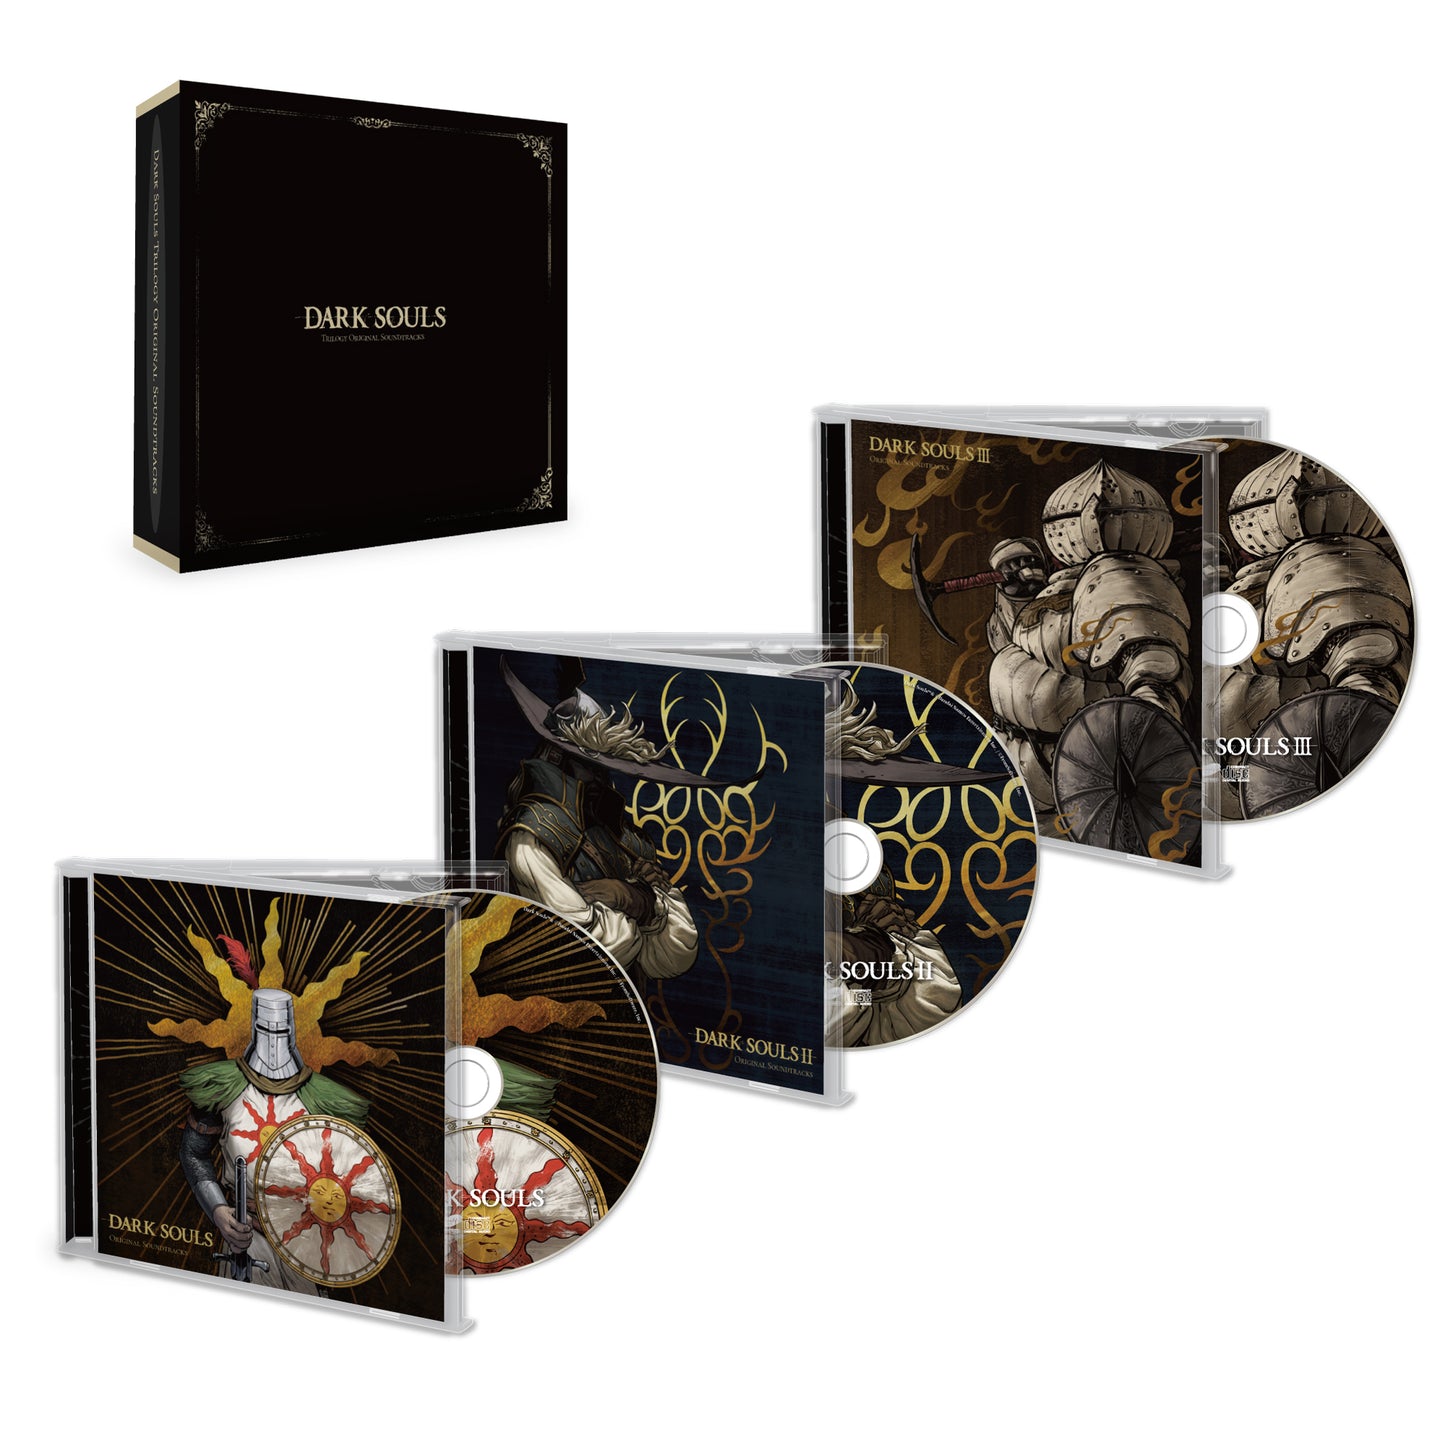 DARK SOULS Trilogy Original Soundtracks CD